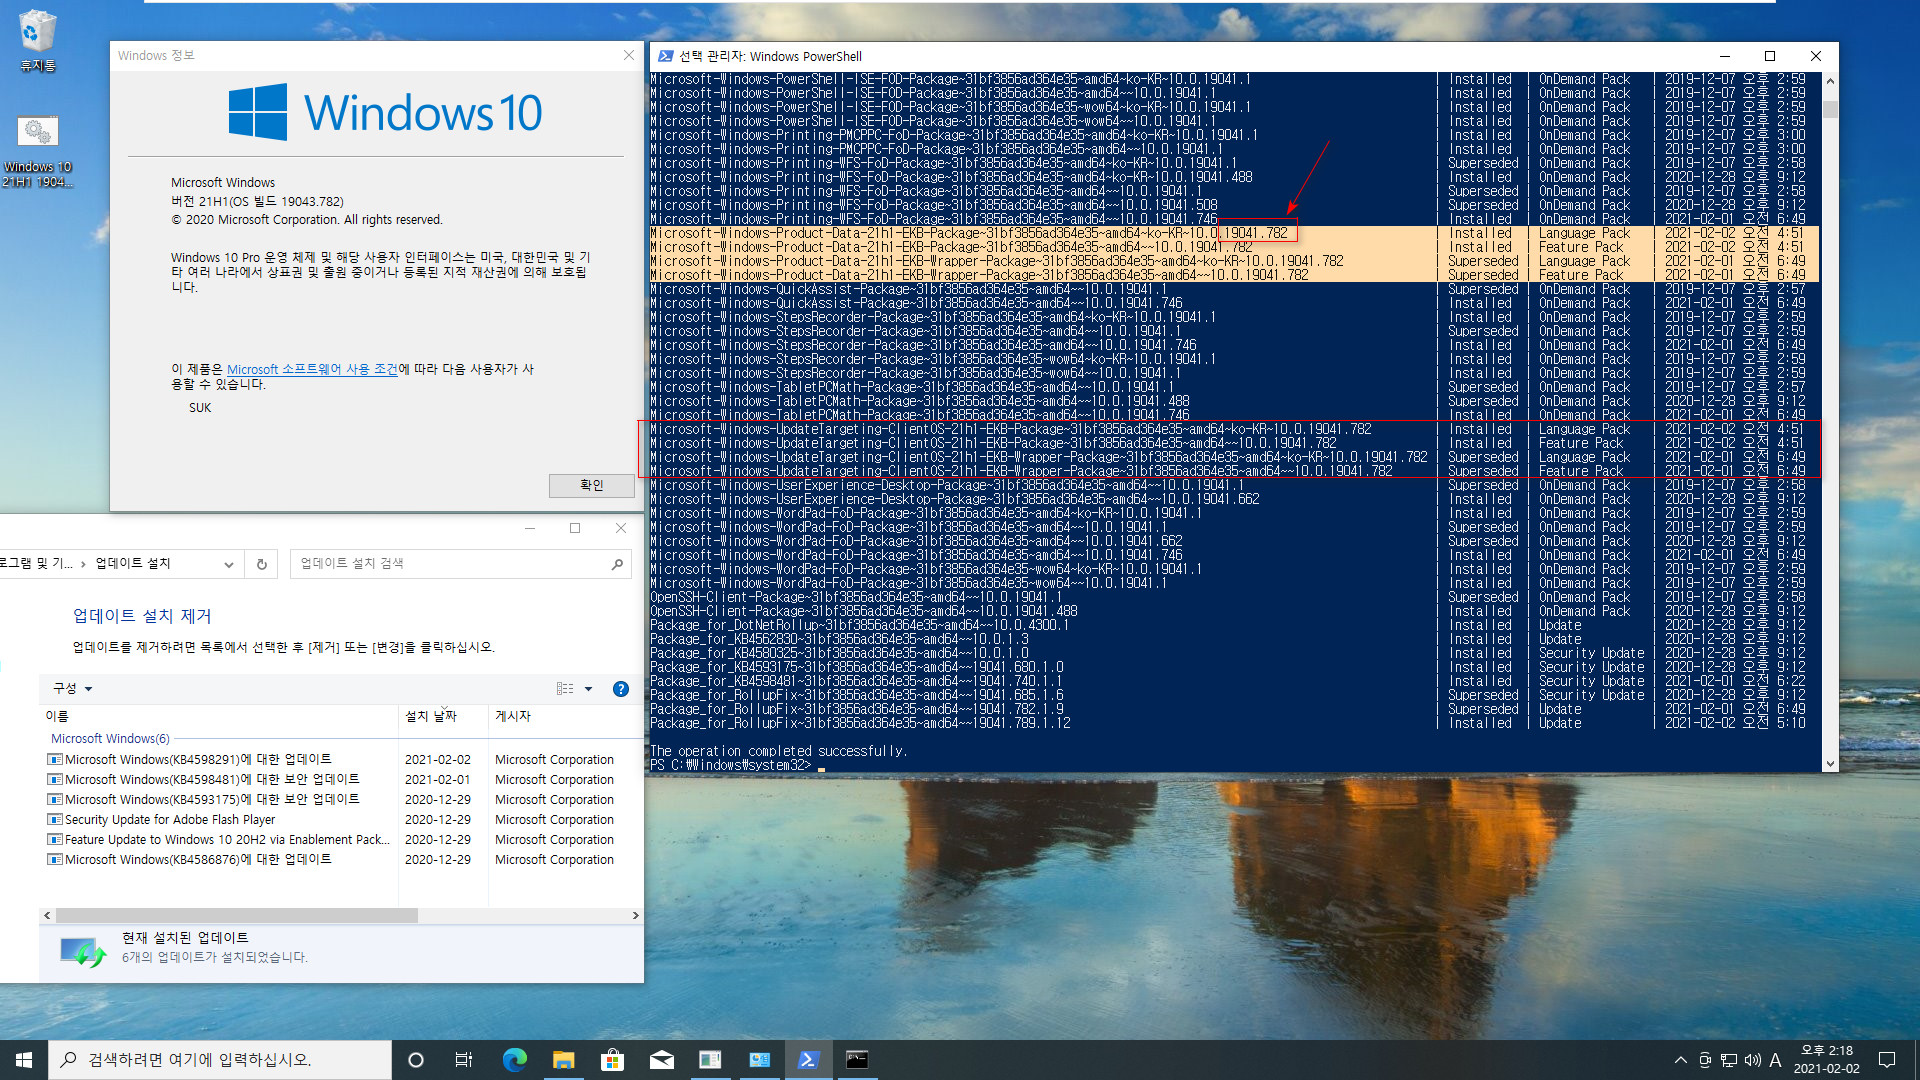 Windows 10 21H1 19043 빌드로 업그레이드하기2.bat 테스트 - 21H1 업그레이드 후에 새 누적 업데이트 설치하려면, 21H1 제거한 후에 새 누적 업데이트 설치해야 하네요 2021-02-02_141813.jpg